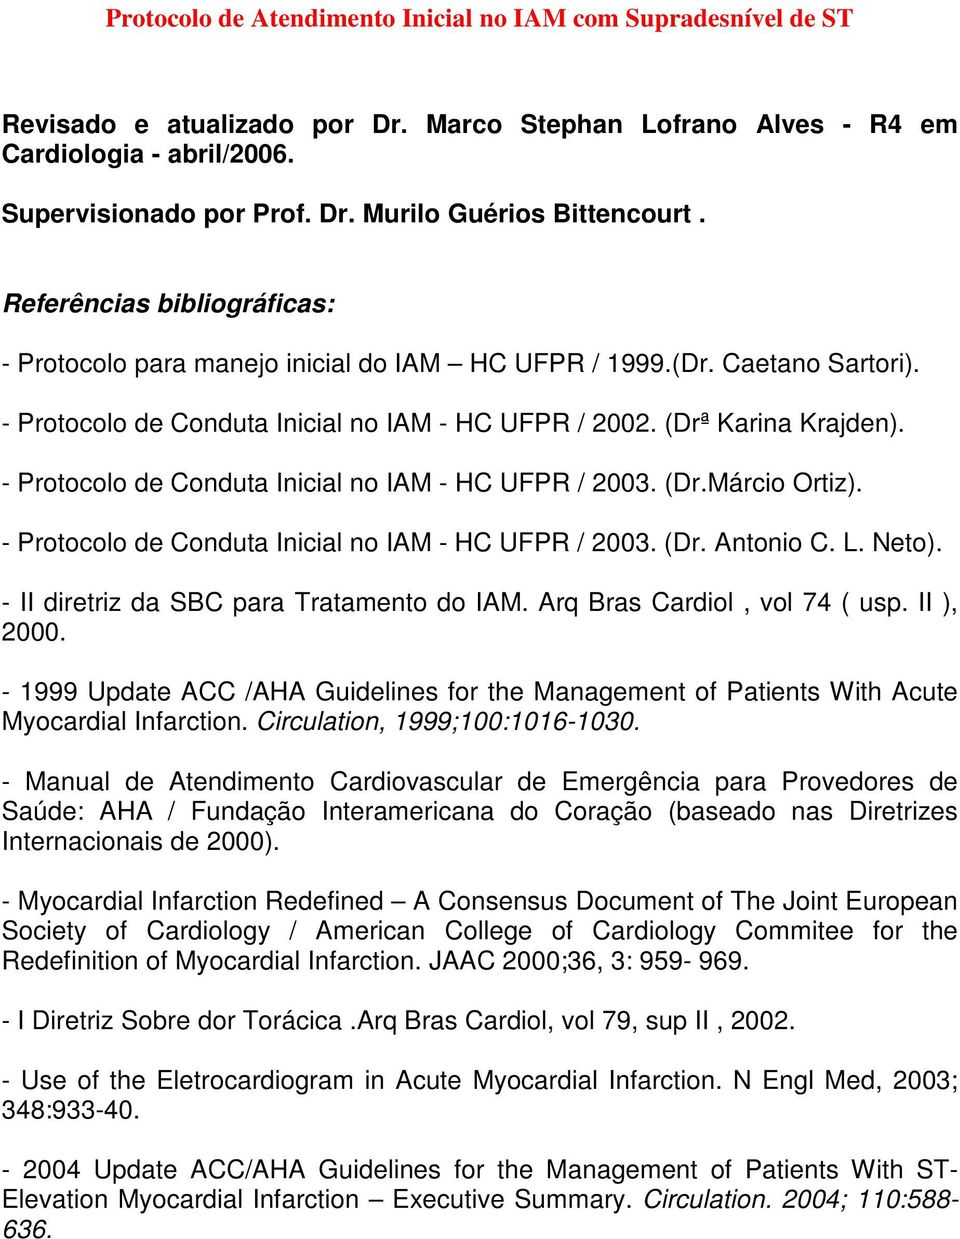 - Protocolo de Conduta Inicial no IAM - HC UFPR / 2003. (Dr.Márcio Ortiz). - Protocolo de Conduta Inicial no IAM - HC UFPR / 2003. (Dr. Antonio C. L. Neto).